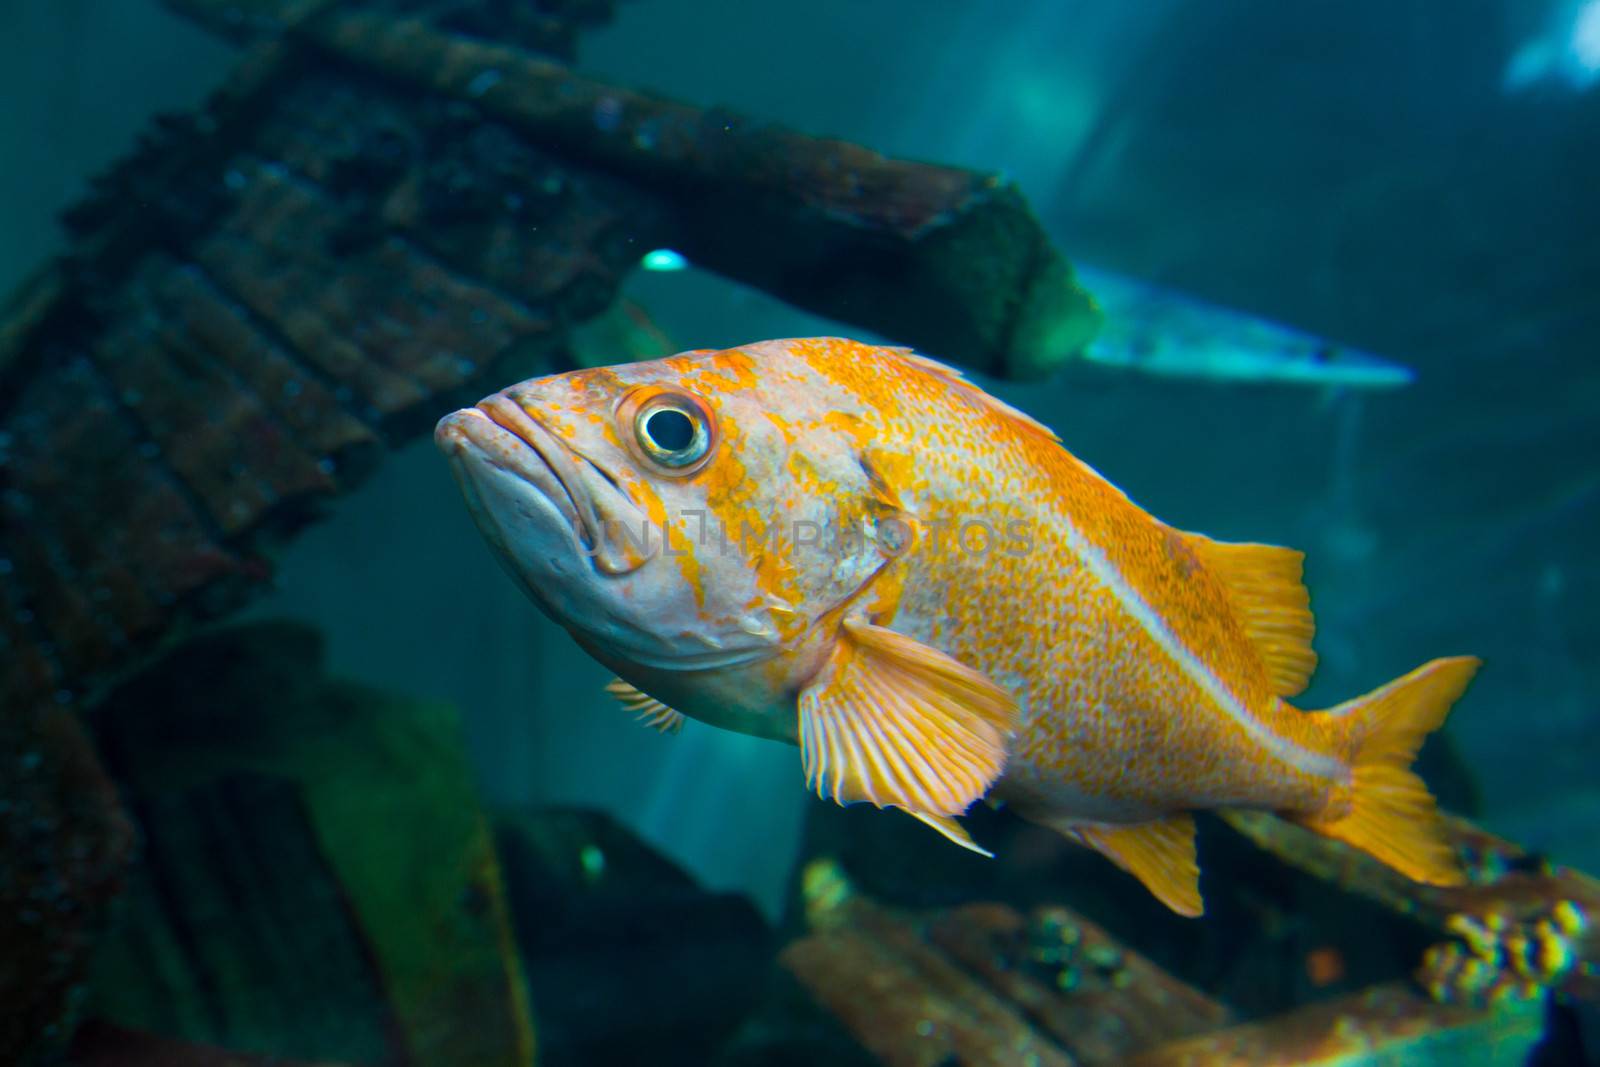 Snapper at Aquarium by joshuaraineyphotography